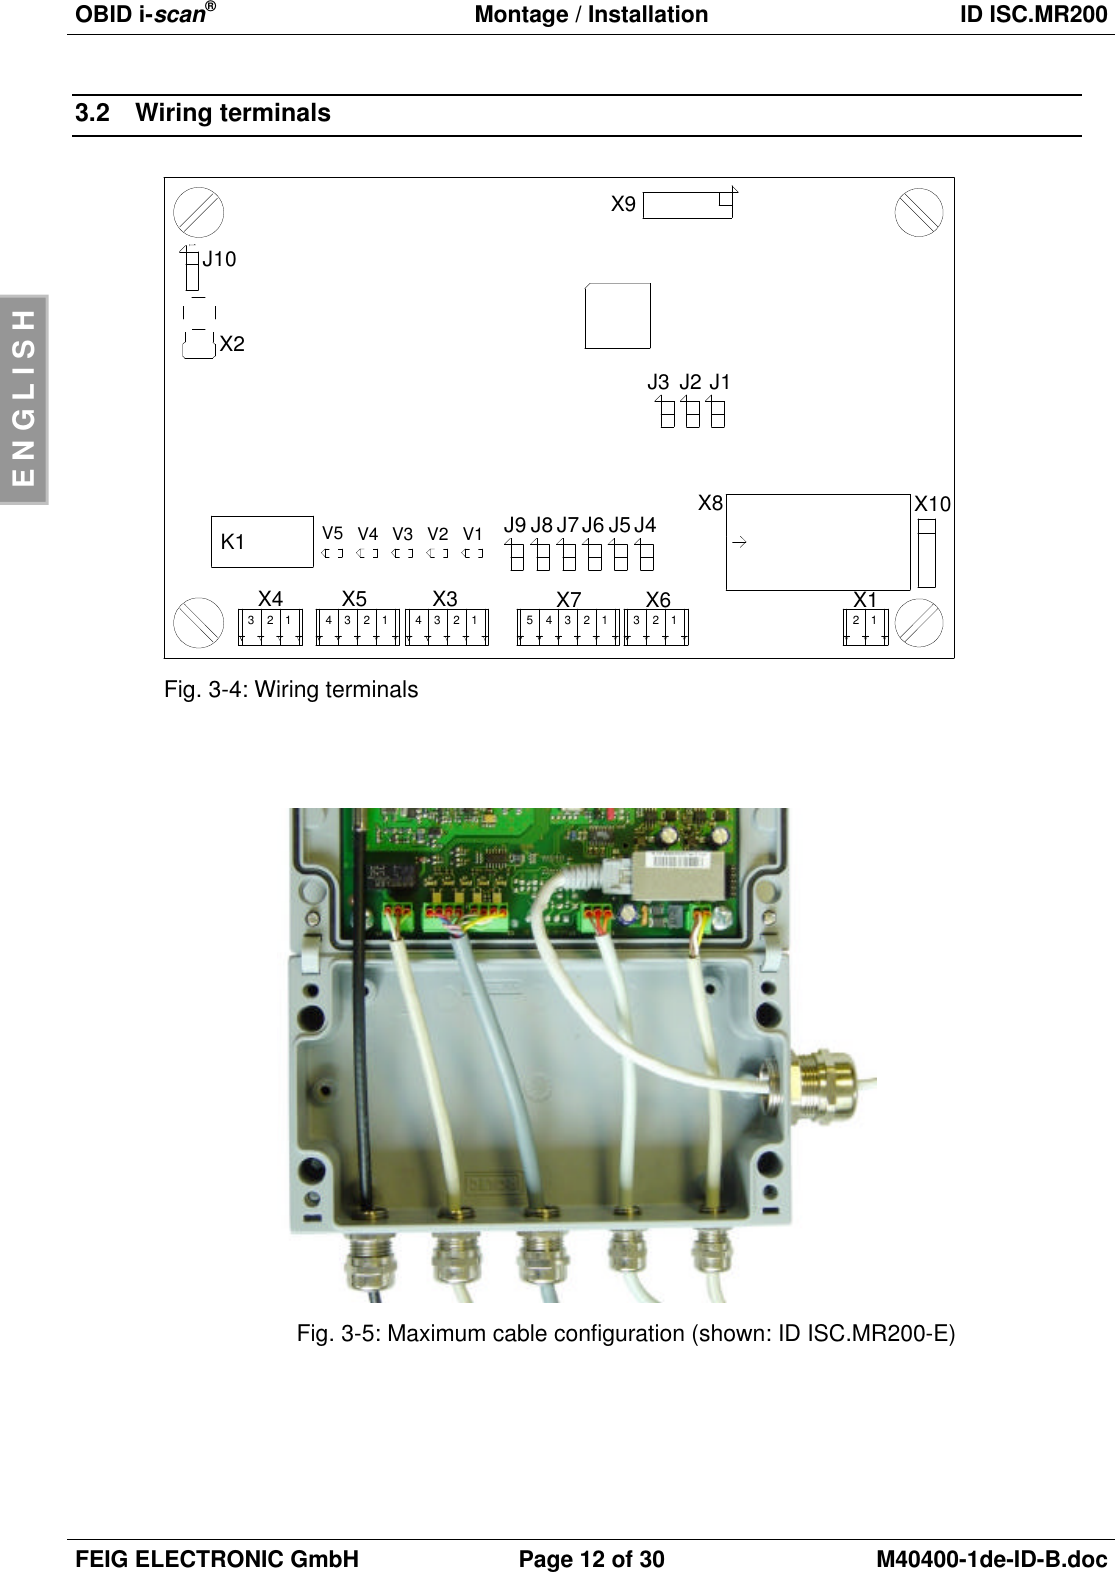 OBID i-scan®Montage / Installation ID ISC.MR200FEIG ELECTRONIC GmbH Page 12 of 30 M40400-1de-ID-B.docENGLISH3.2 Wiring terminalsFig. 3-4: Wiring terminalsFig. 3-5: Maximum cable configuration (shown: ID ISC.MR200-E)X1X6X7X3X5X4X8 X10X9X2K1 J9 J8 J7J6 J5 J4V5 V4 V3 V2 V1J3 J2 J1112345 12312341234123 2J10